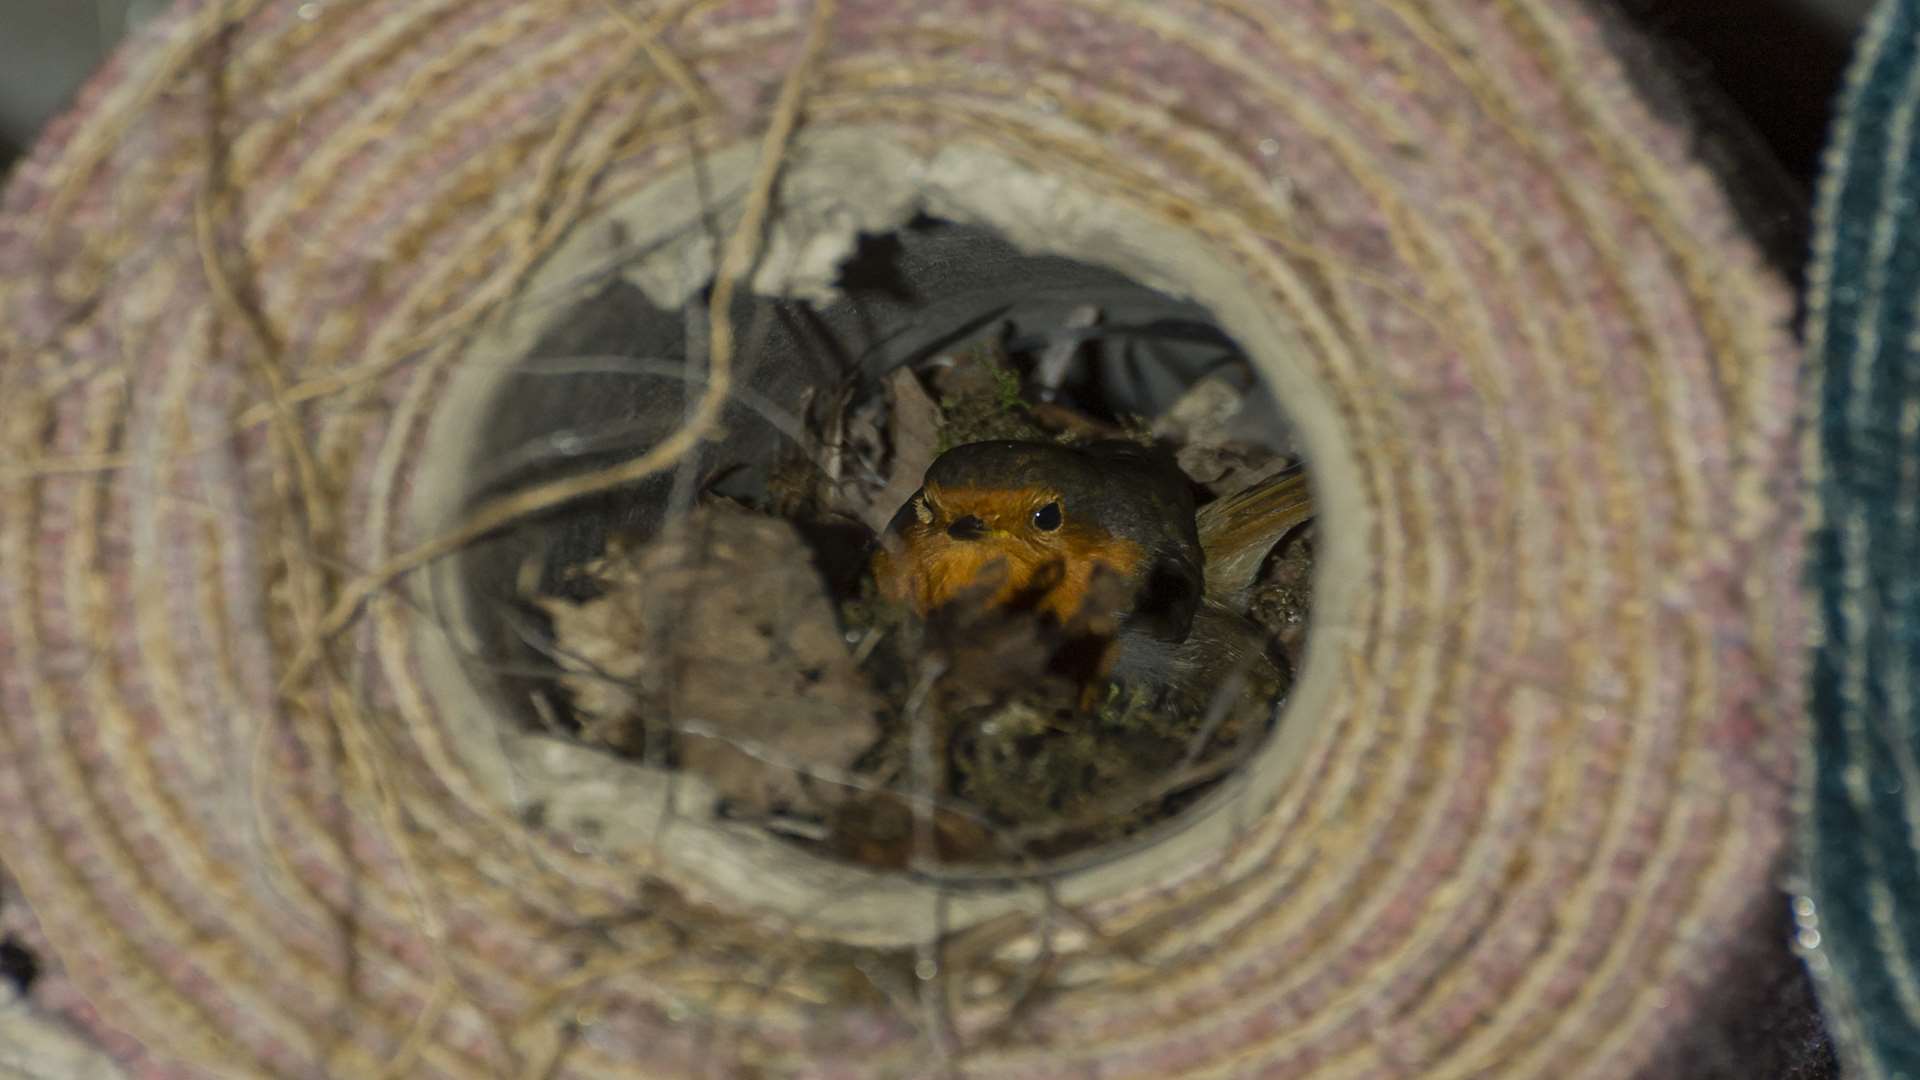 The robin has begun building a nest